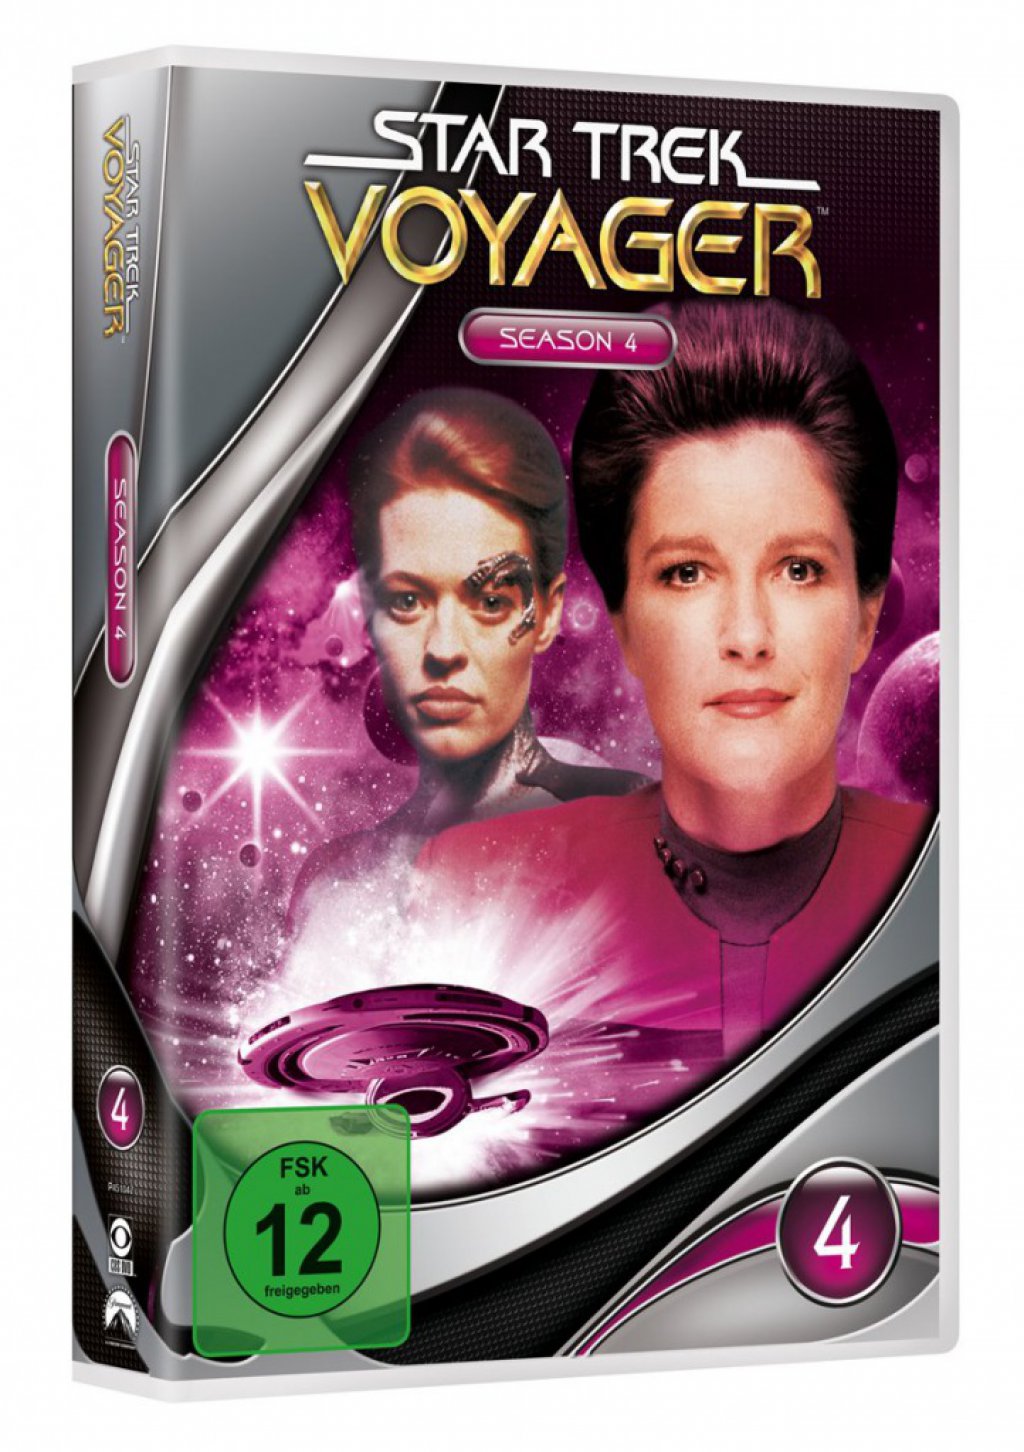 star trek voyager season 4 dvd